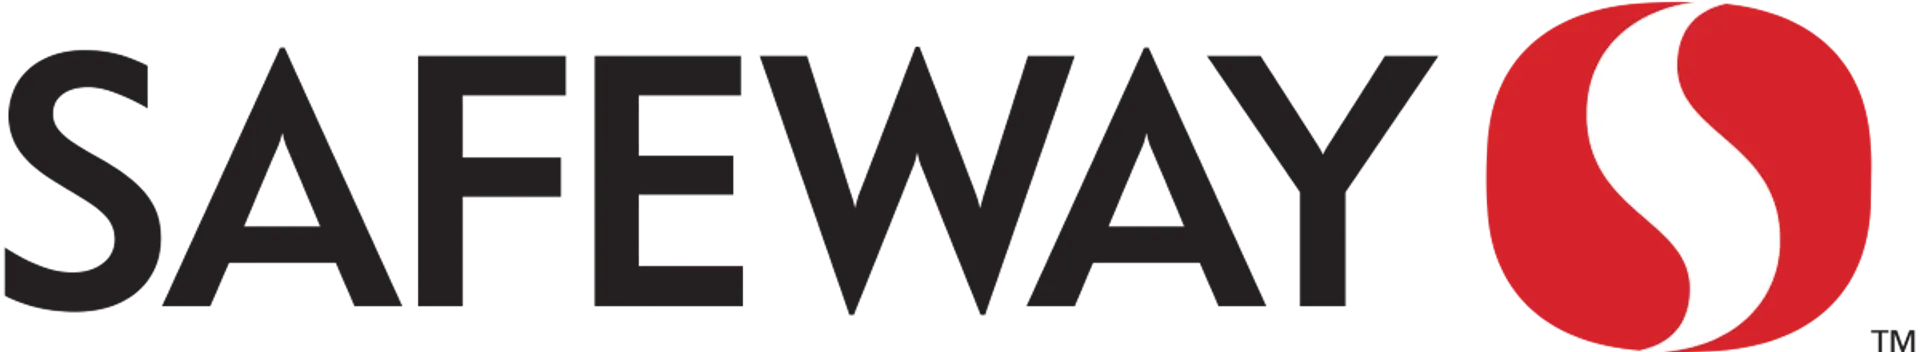 SAFEWAY logo